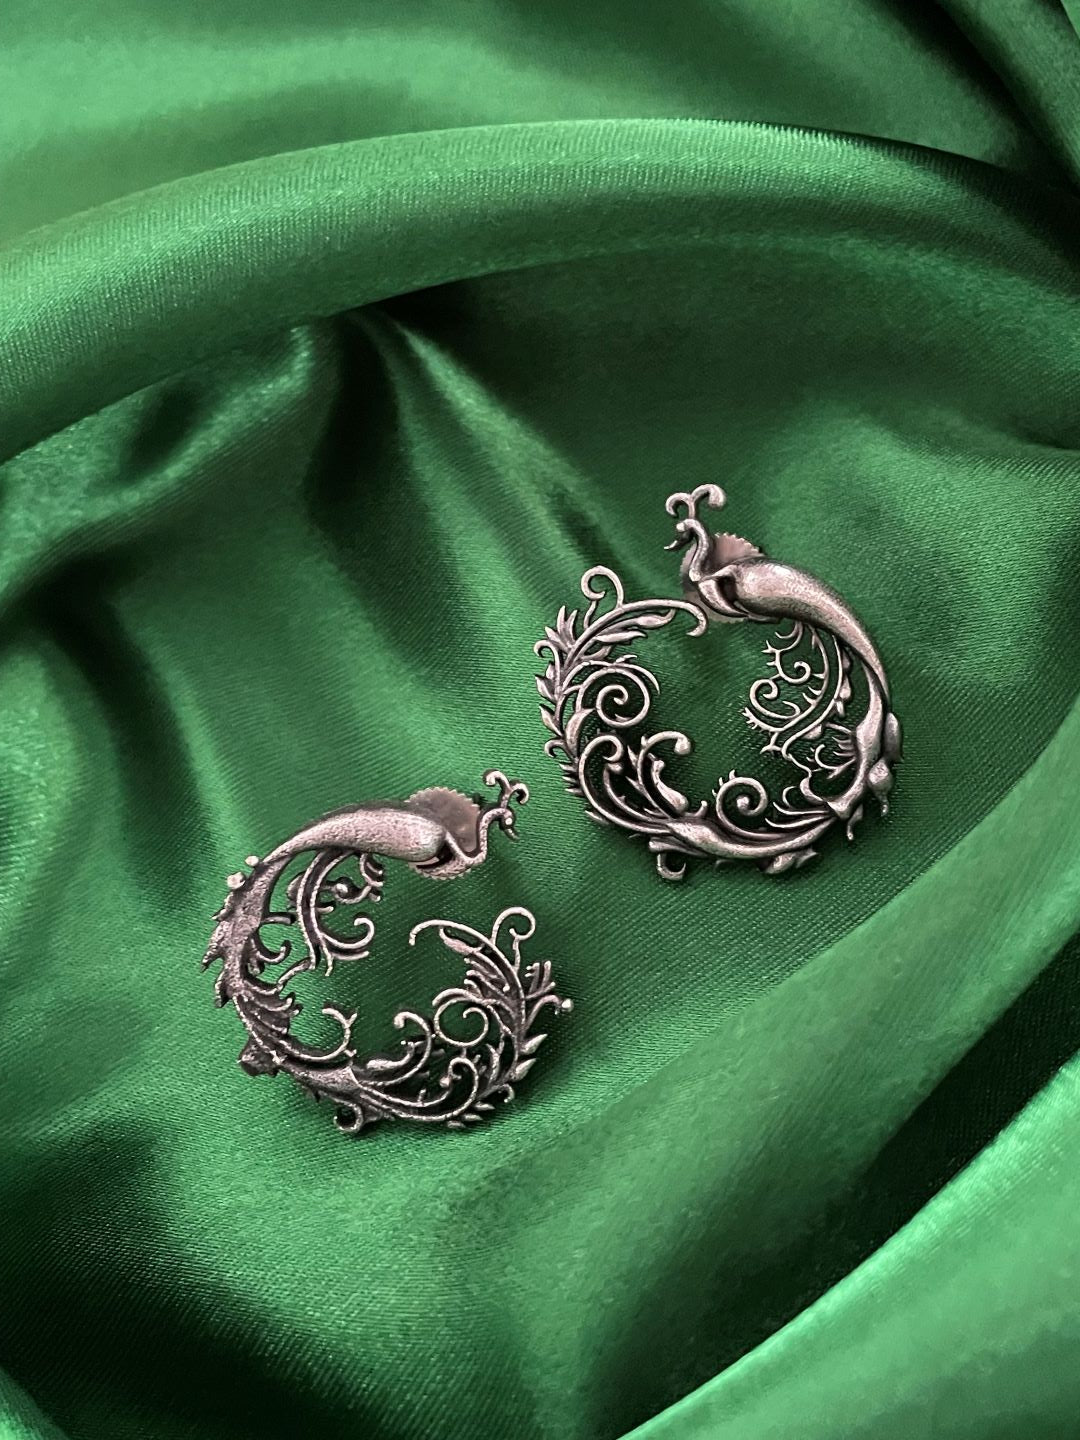 German Oxidized Silver Stud Earrings Peacock Design